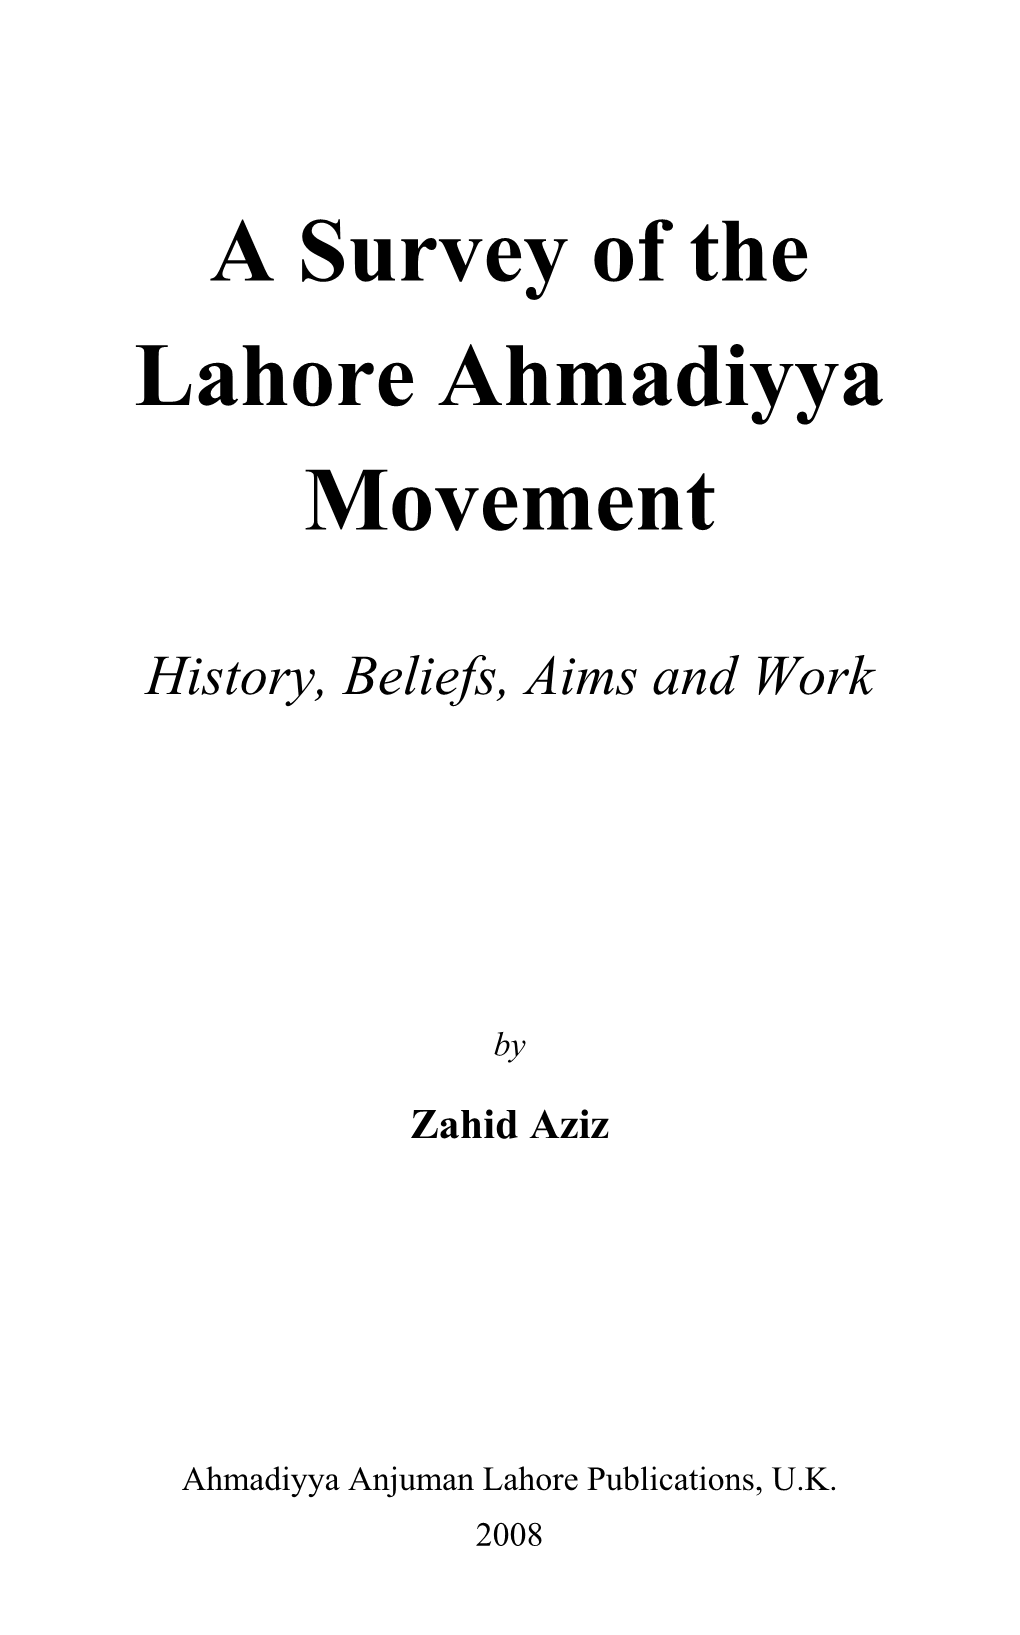 A Survey of the Lahore Ahmadiyya Movement